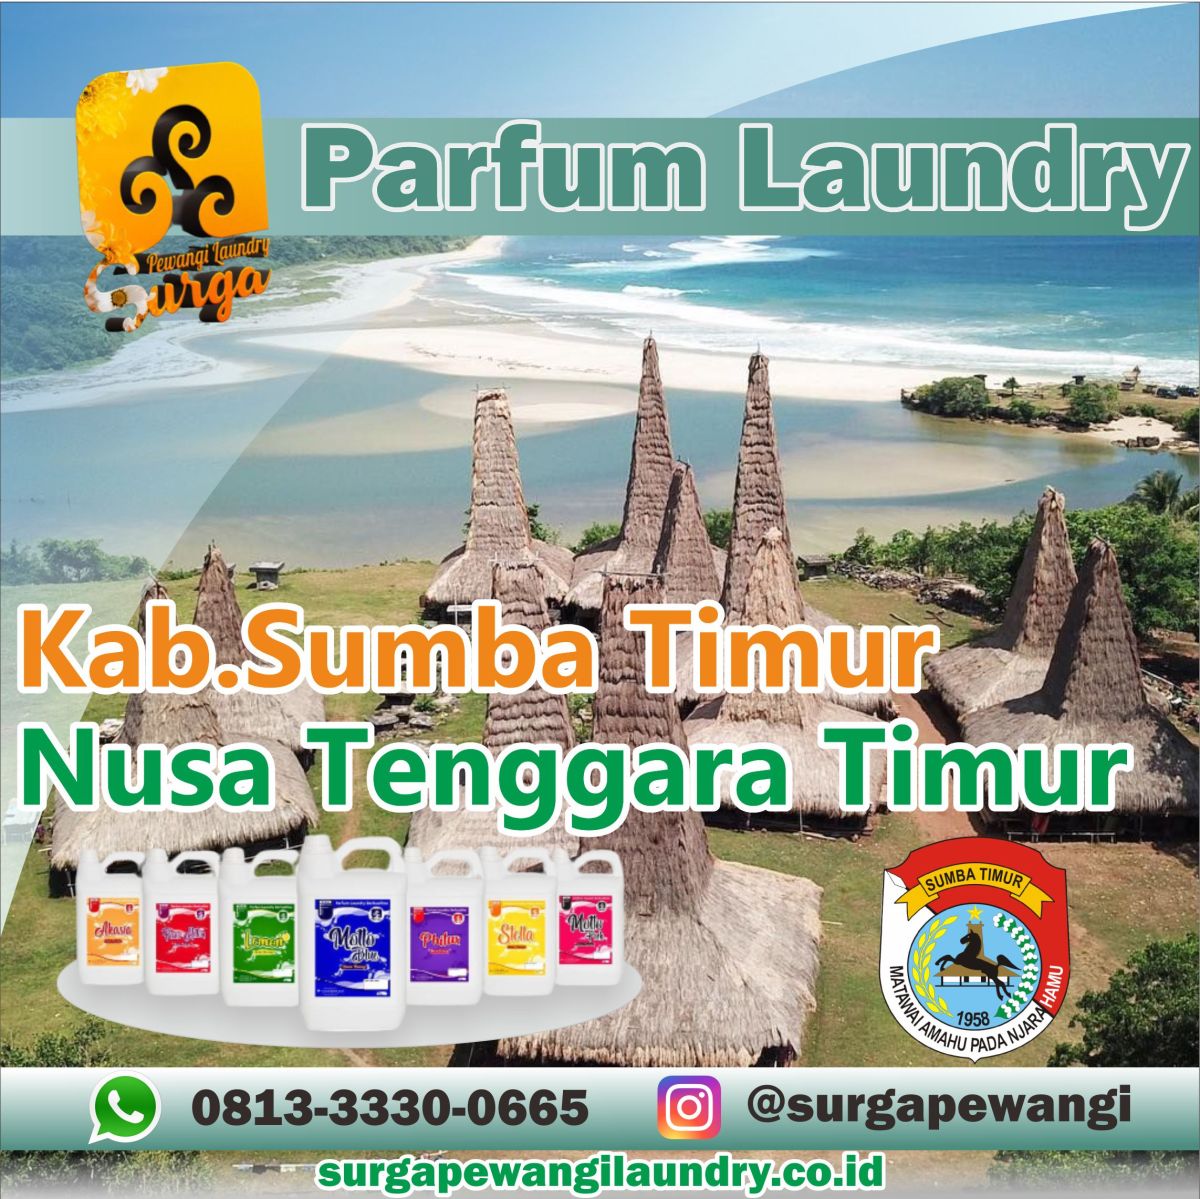 Parfum Laundry Kabupaten Sumba Timur, Nusa Tenggara Timur